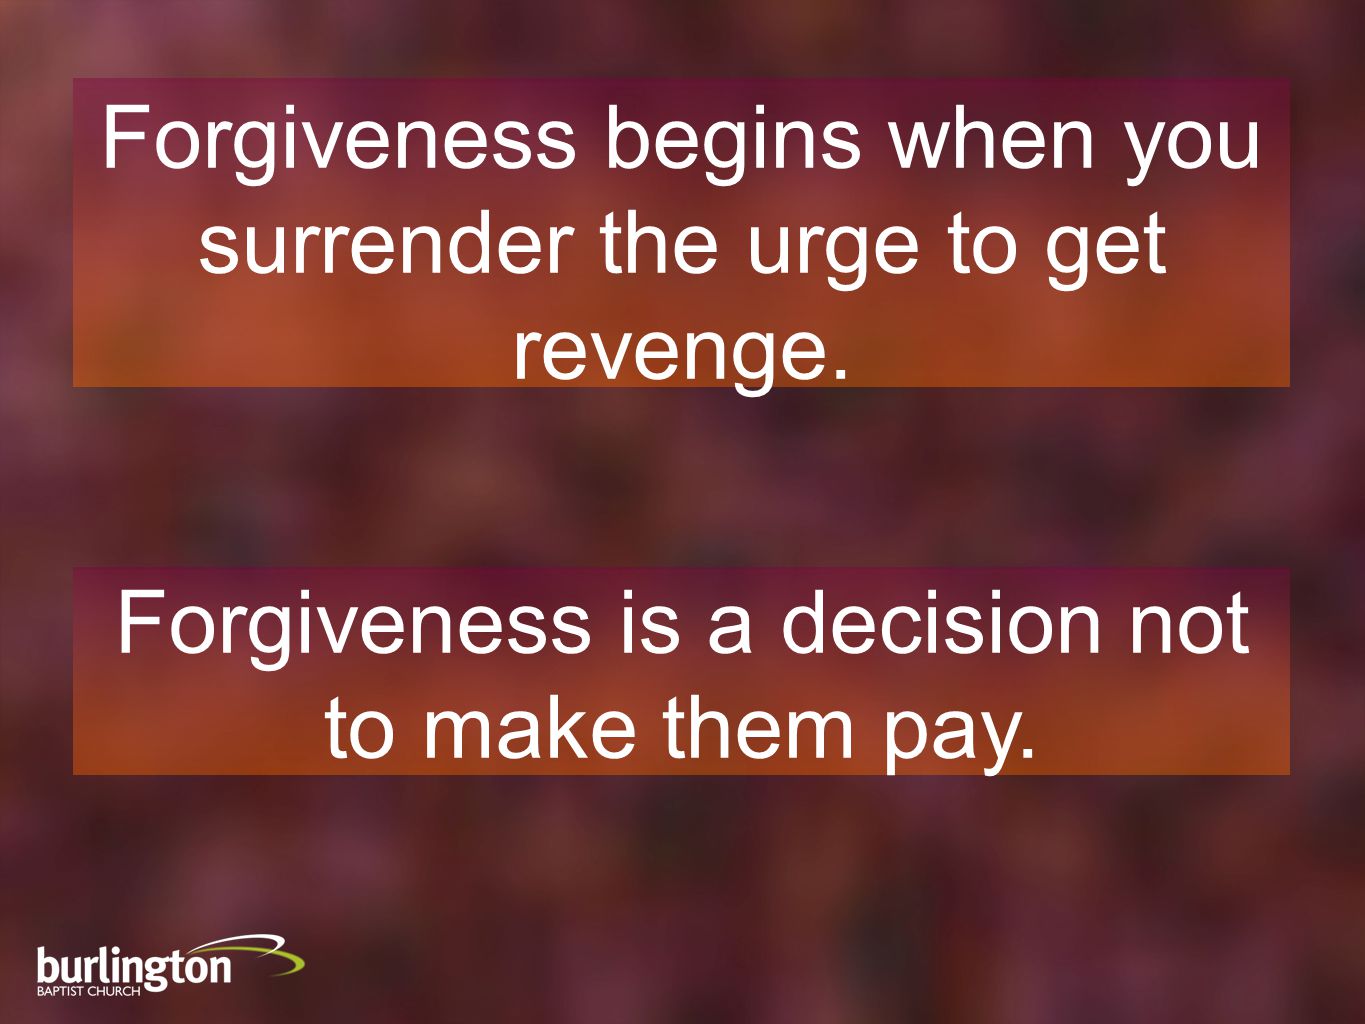 Forgiveness begins when you surrender the urge to get revenge.